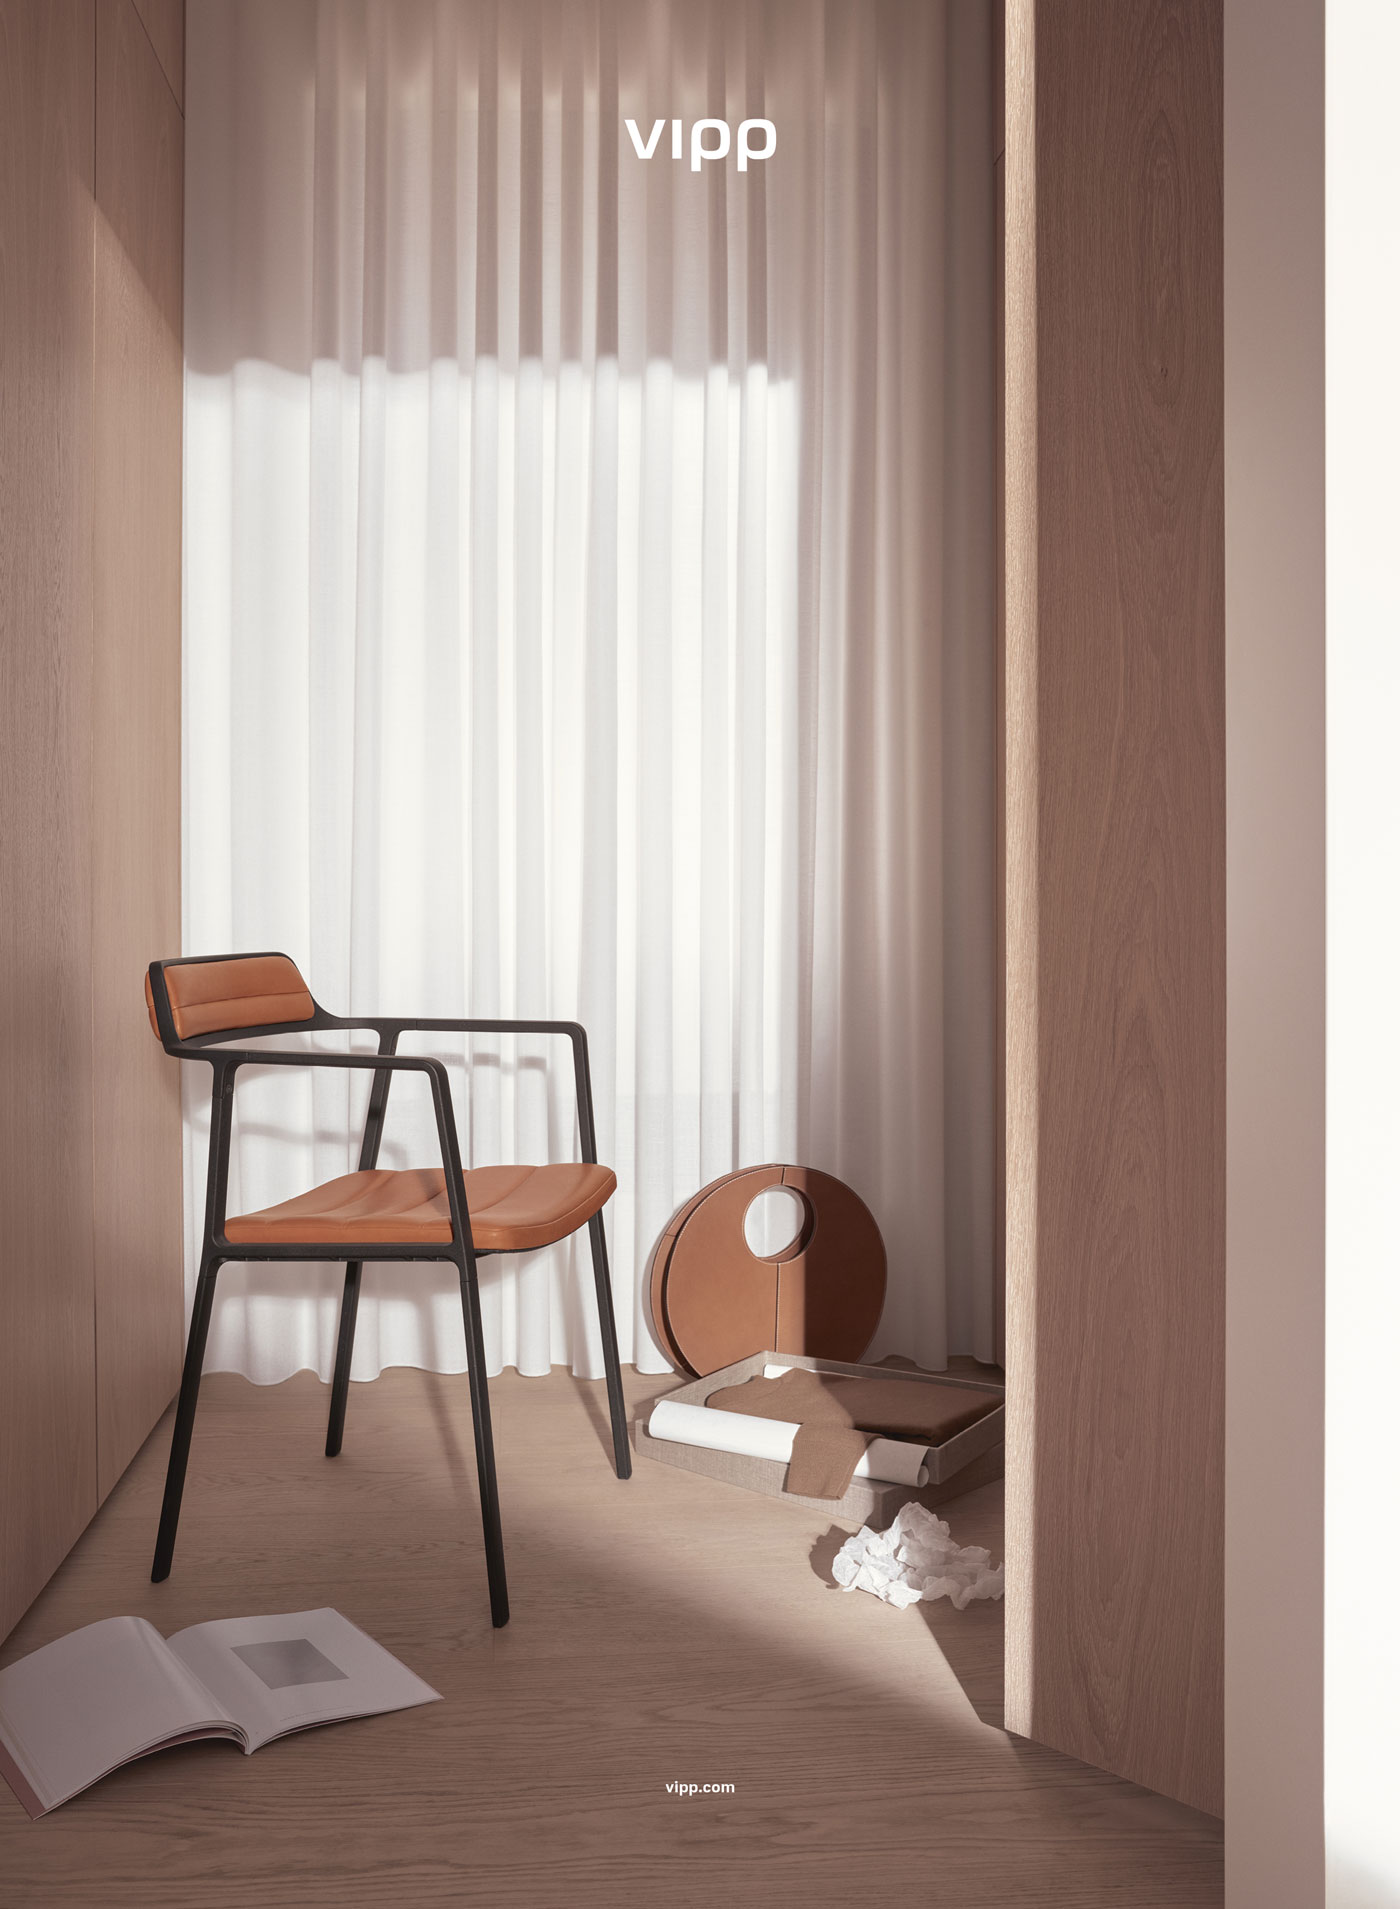 Vipp – Brand Image 2019 Chairs